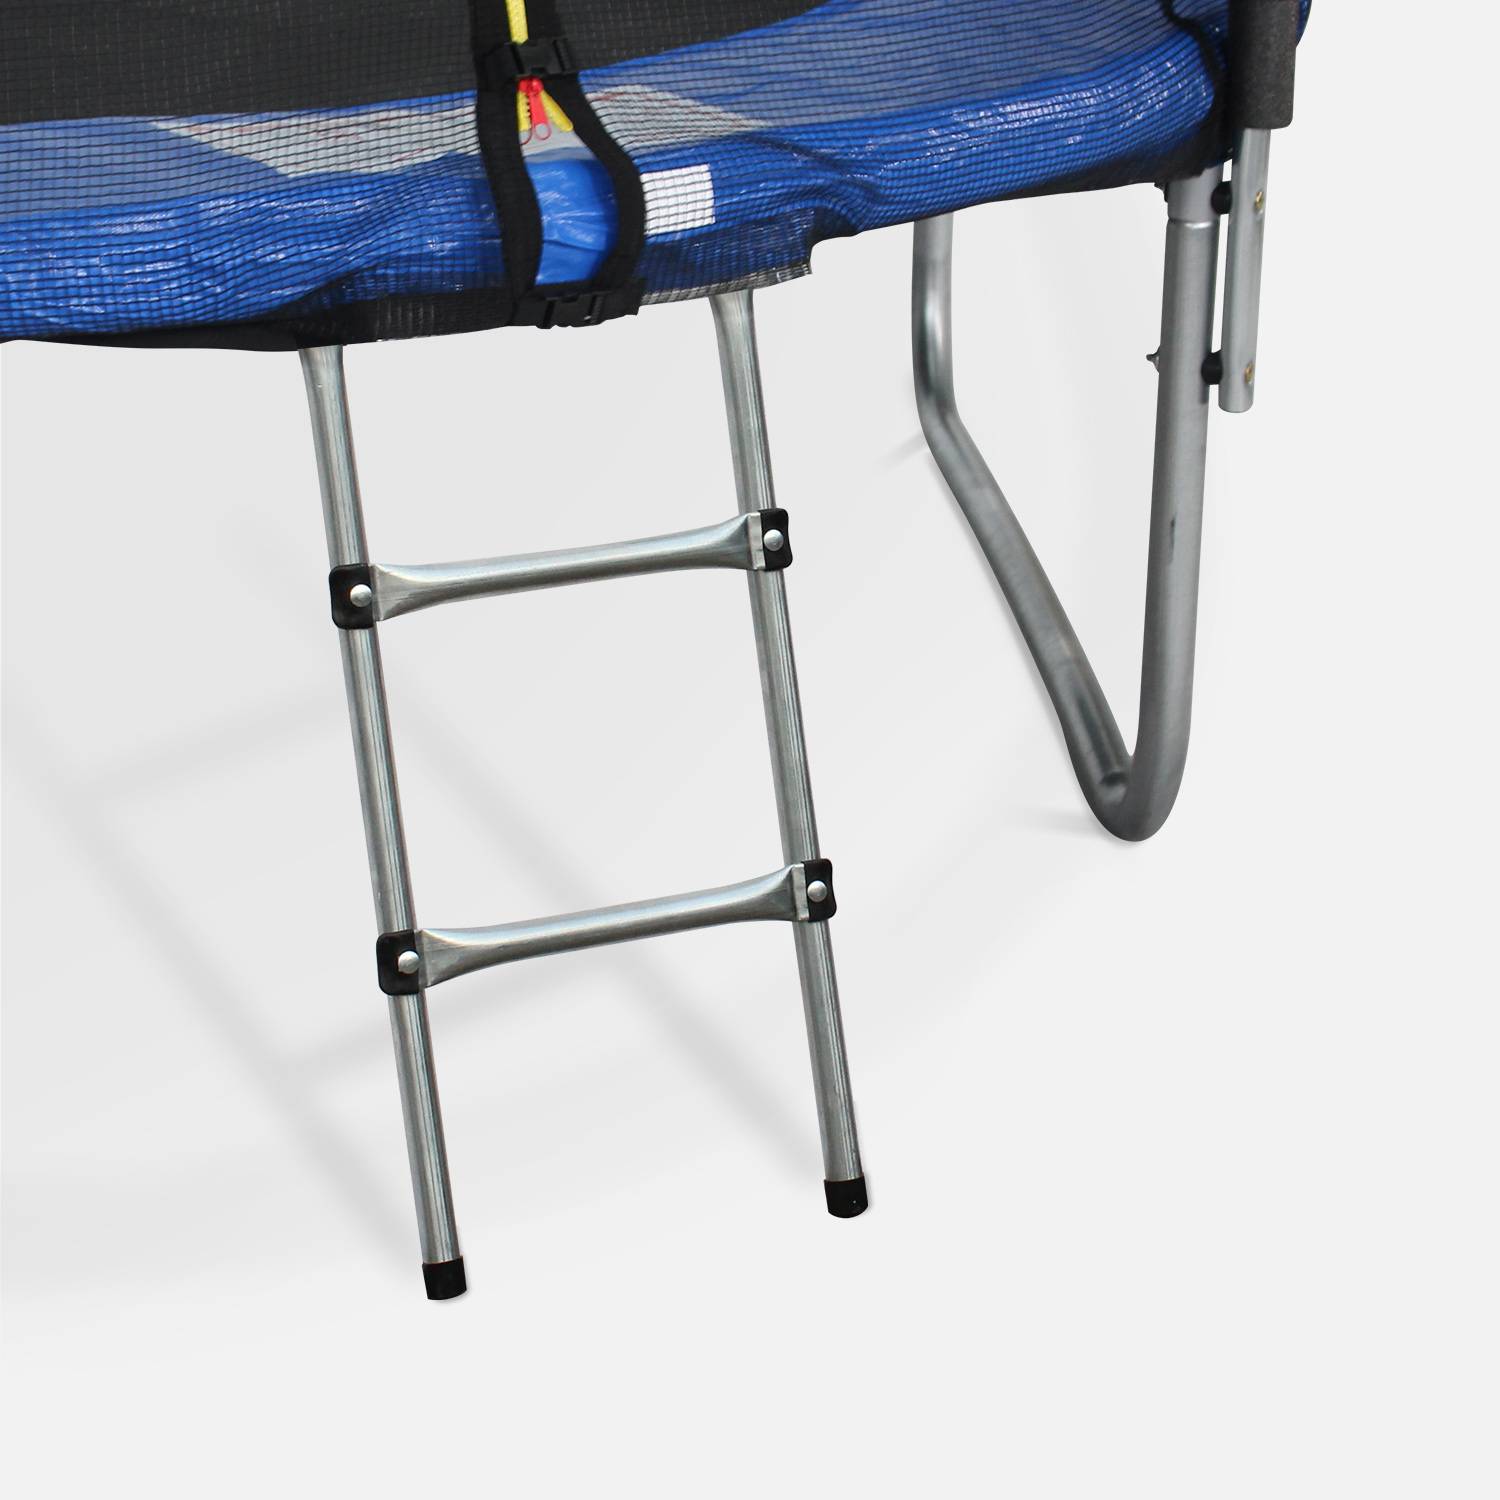 Trampoline Accessories Pack - Ø305 cm - Ladder, Rain Cover, Shoe Net, Anchor Kit Photo2